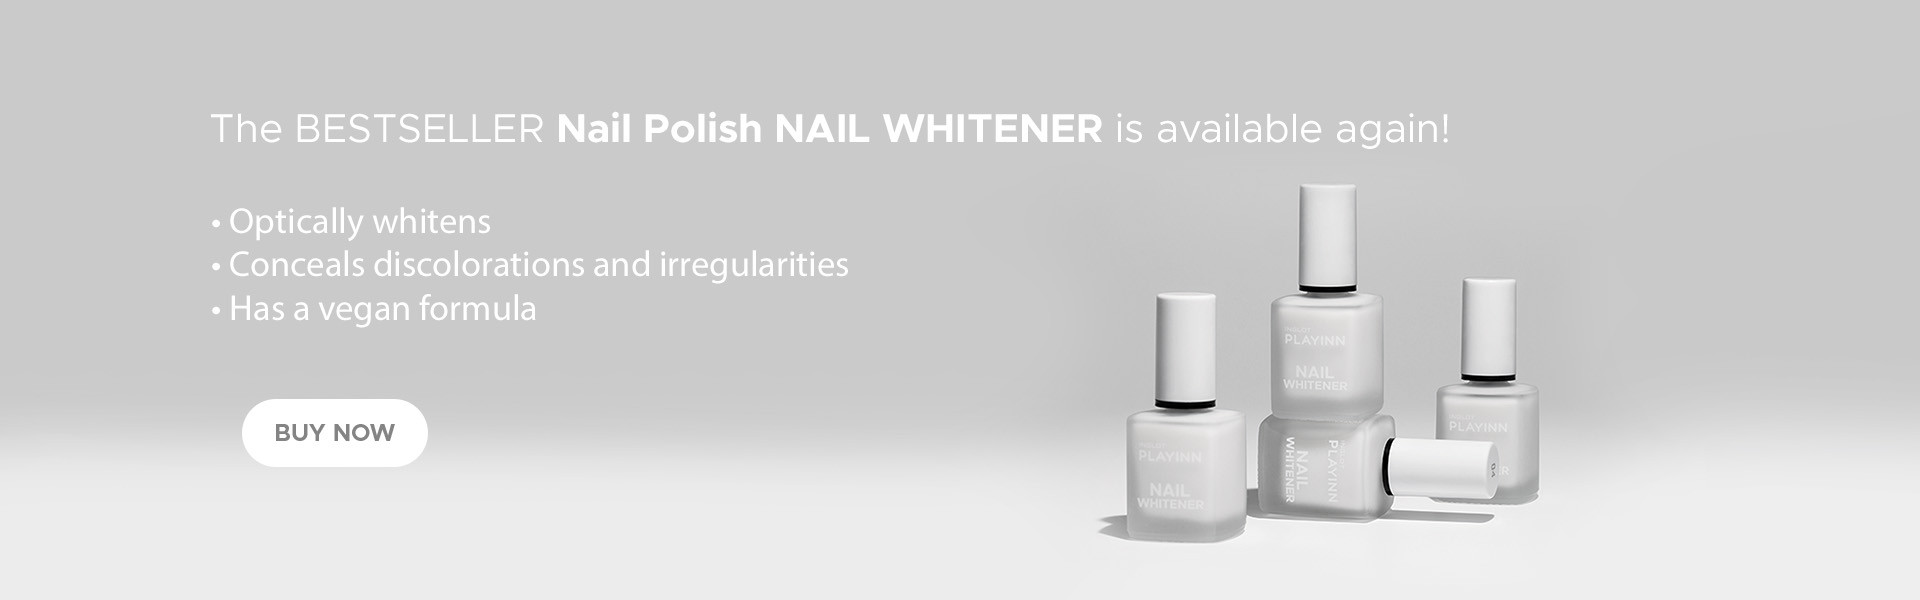 Nail Polish NAIL WHITENER